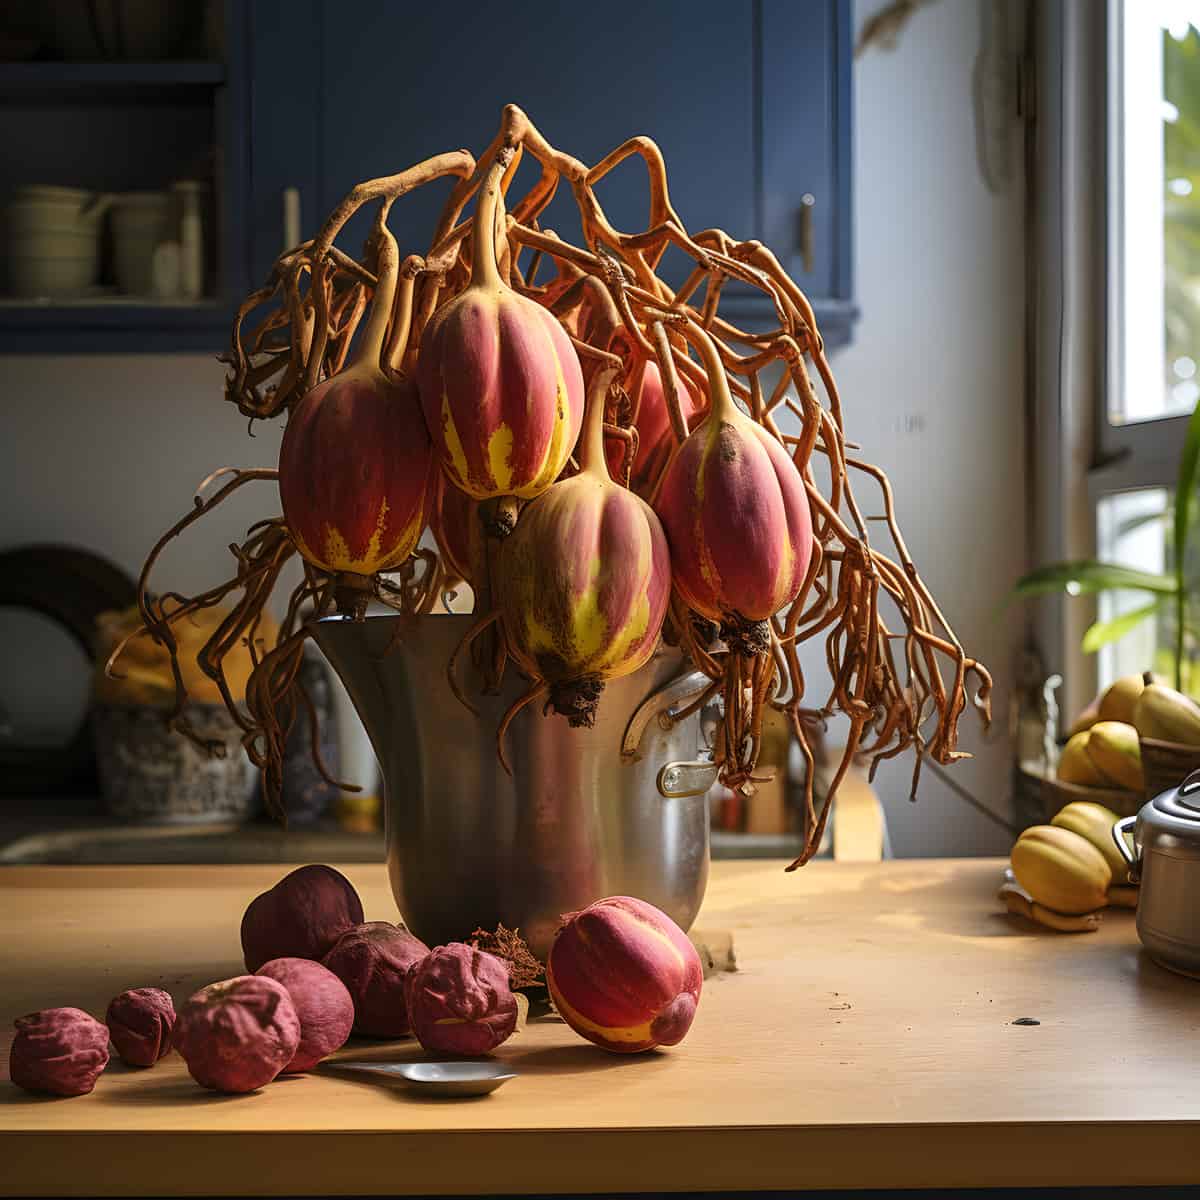 Strangler Fig Fruit on a kitchen counter